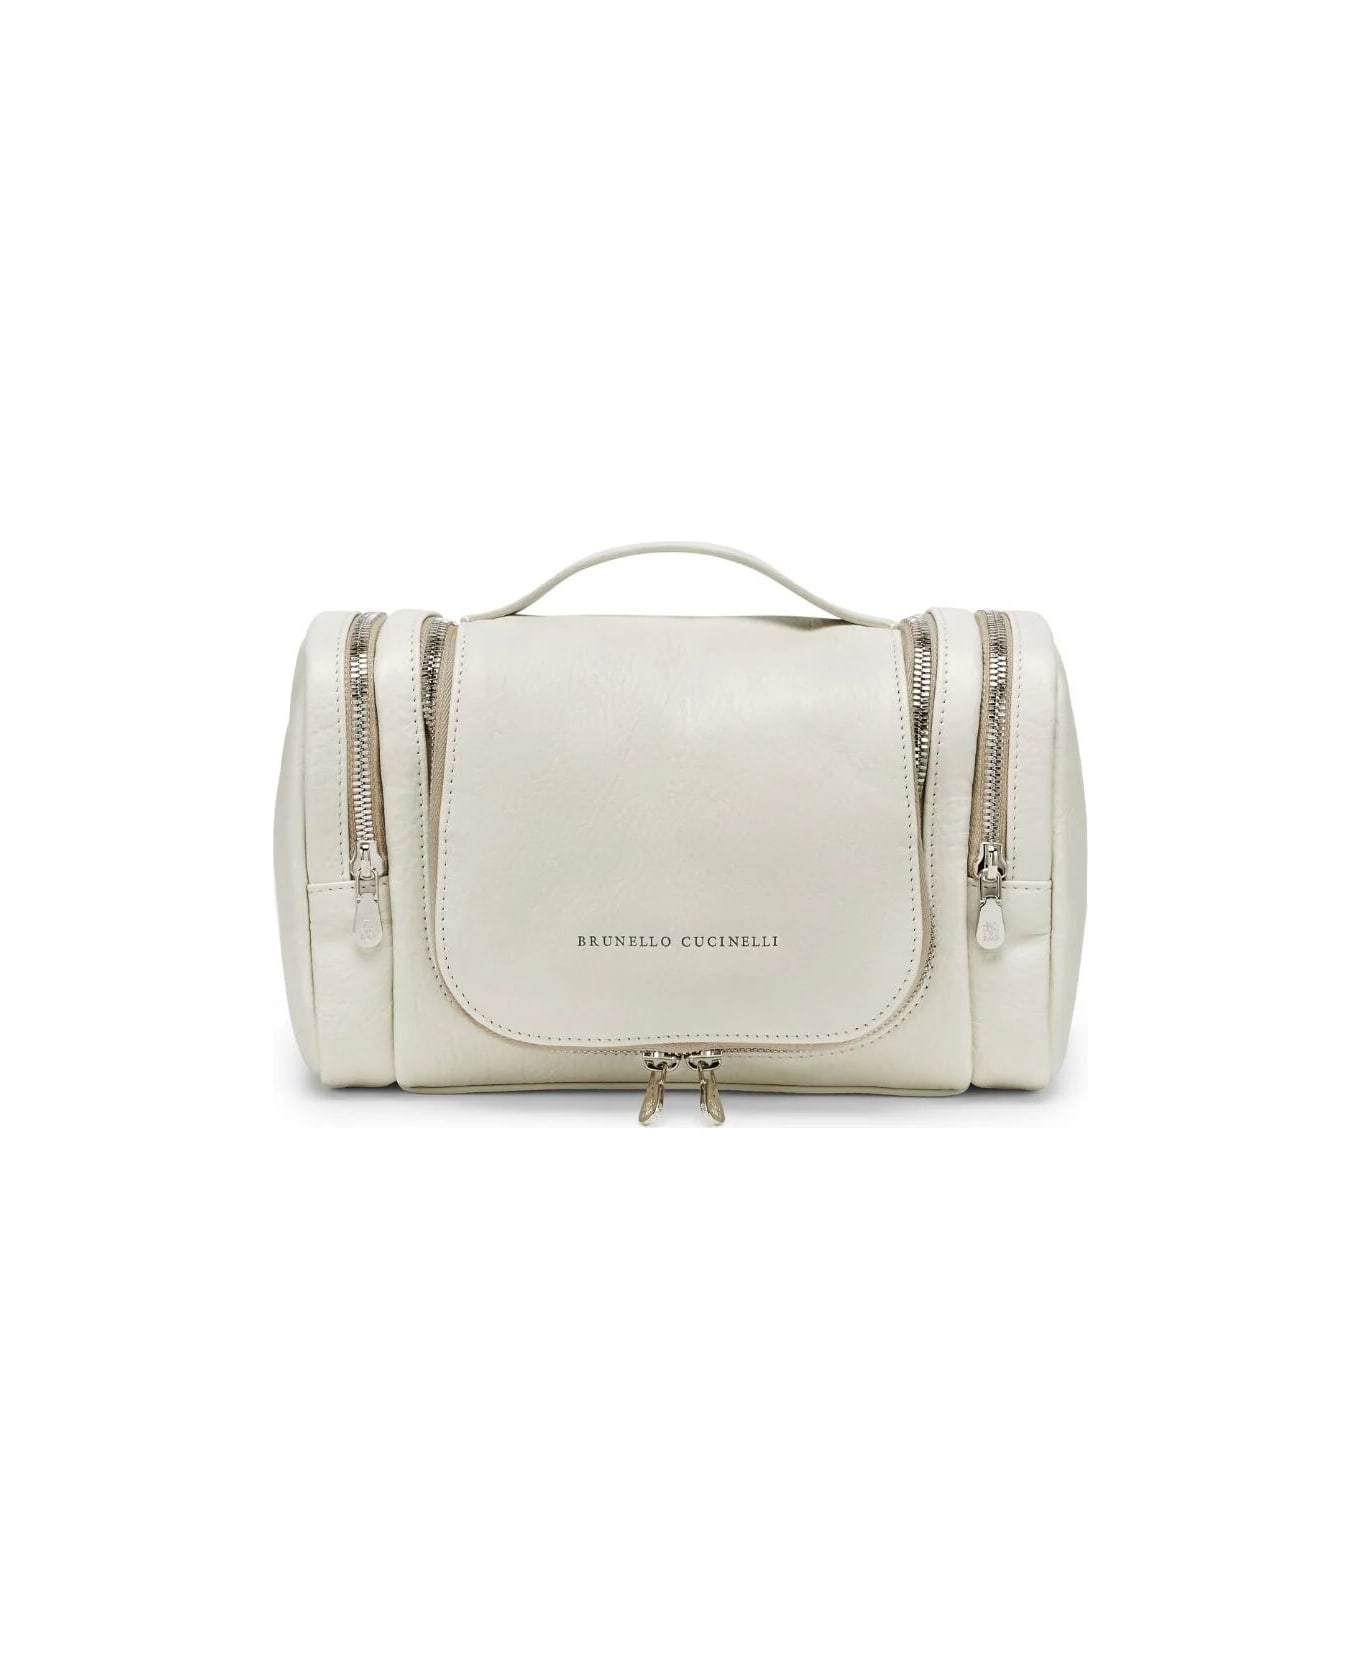 Brunello Cucinelli Leather Beauty Case - English White